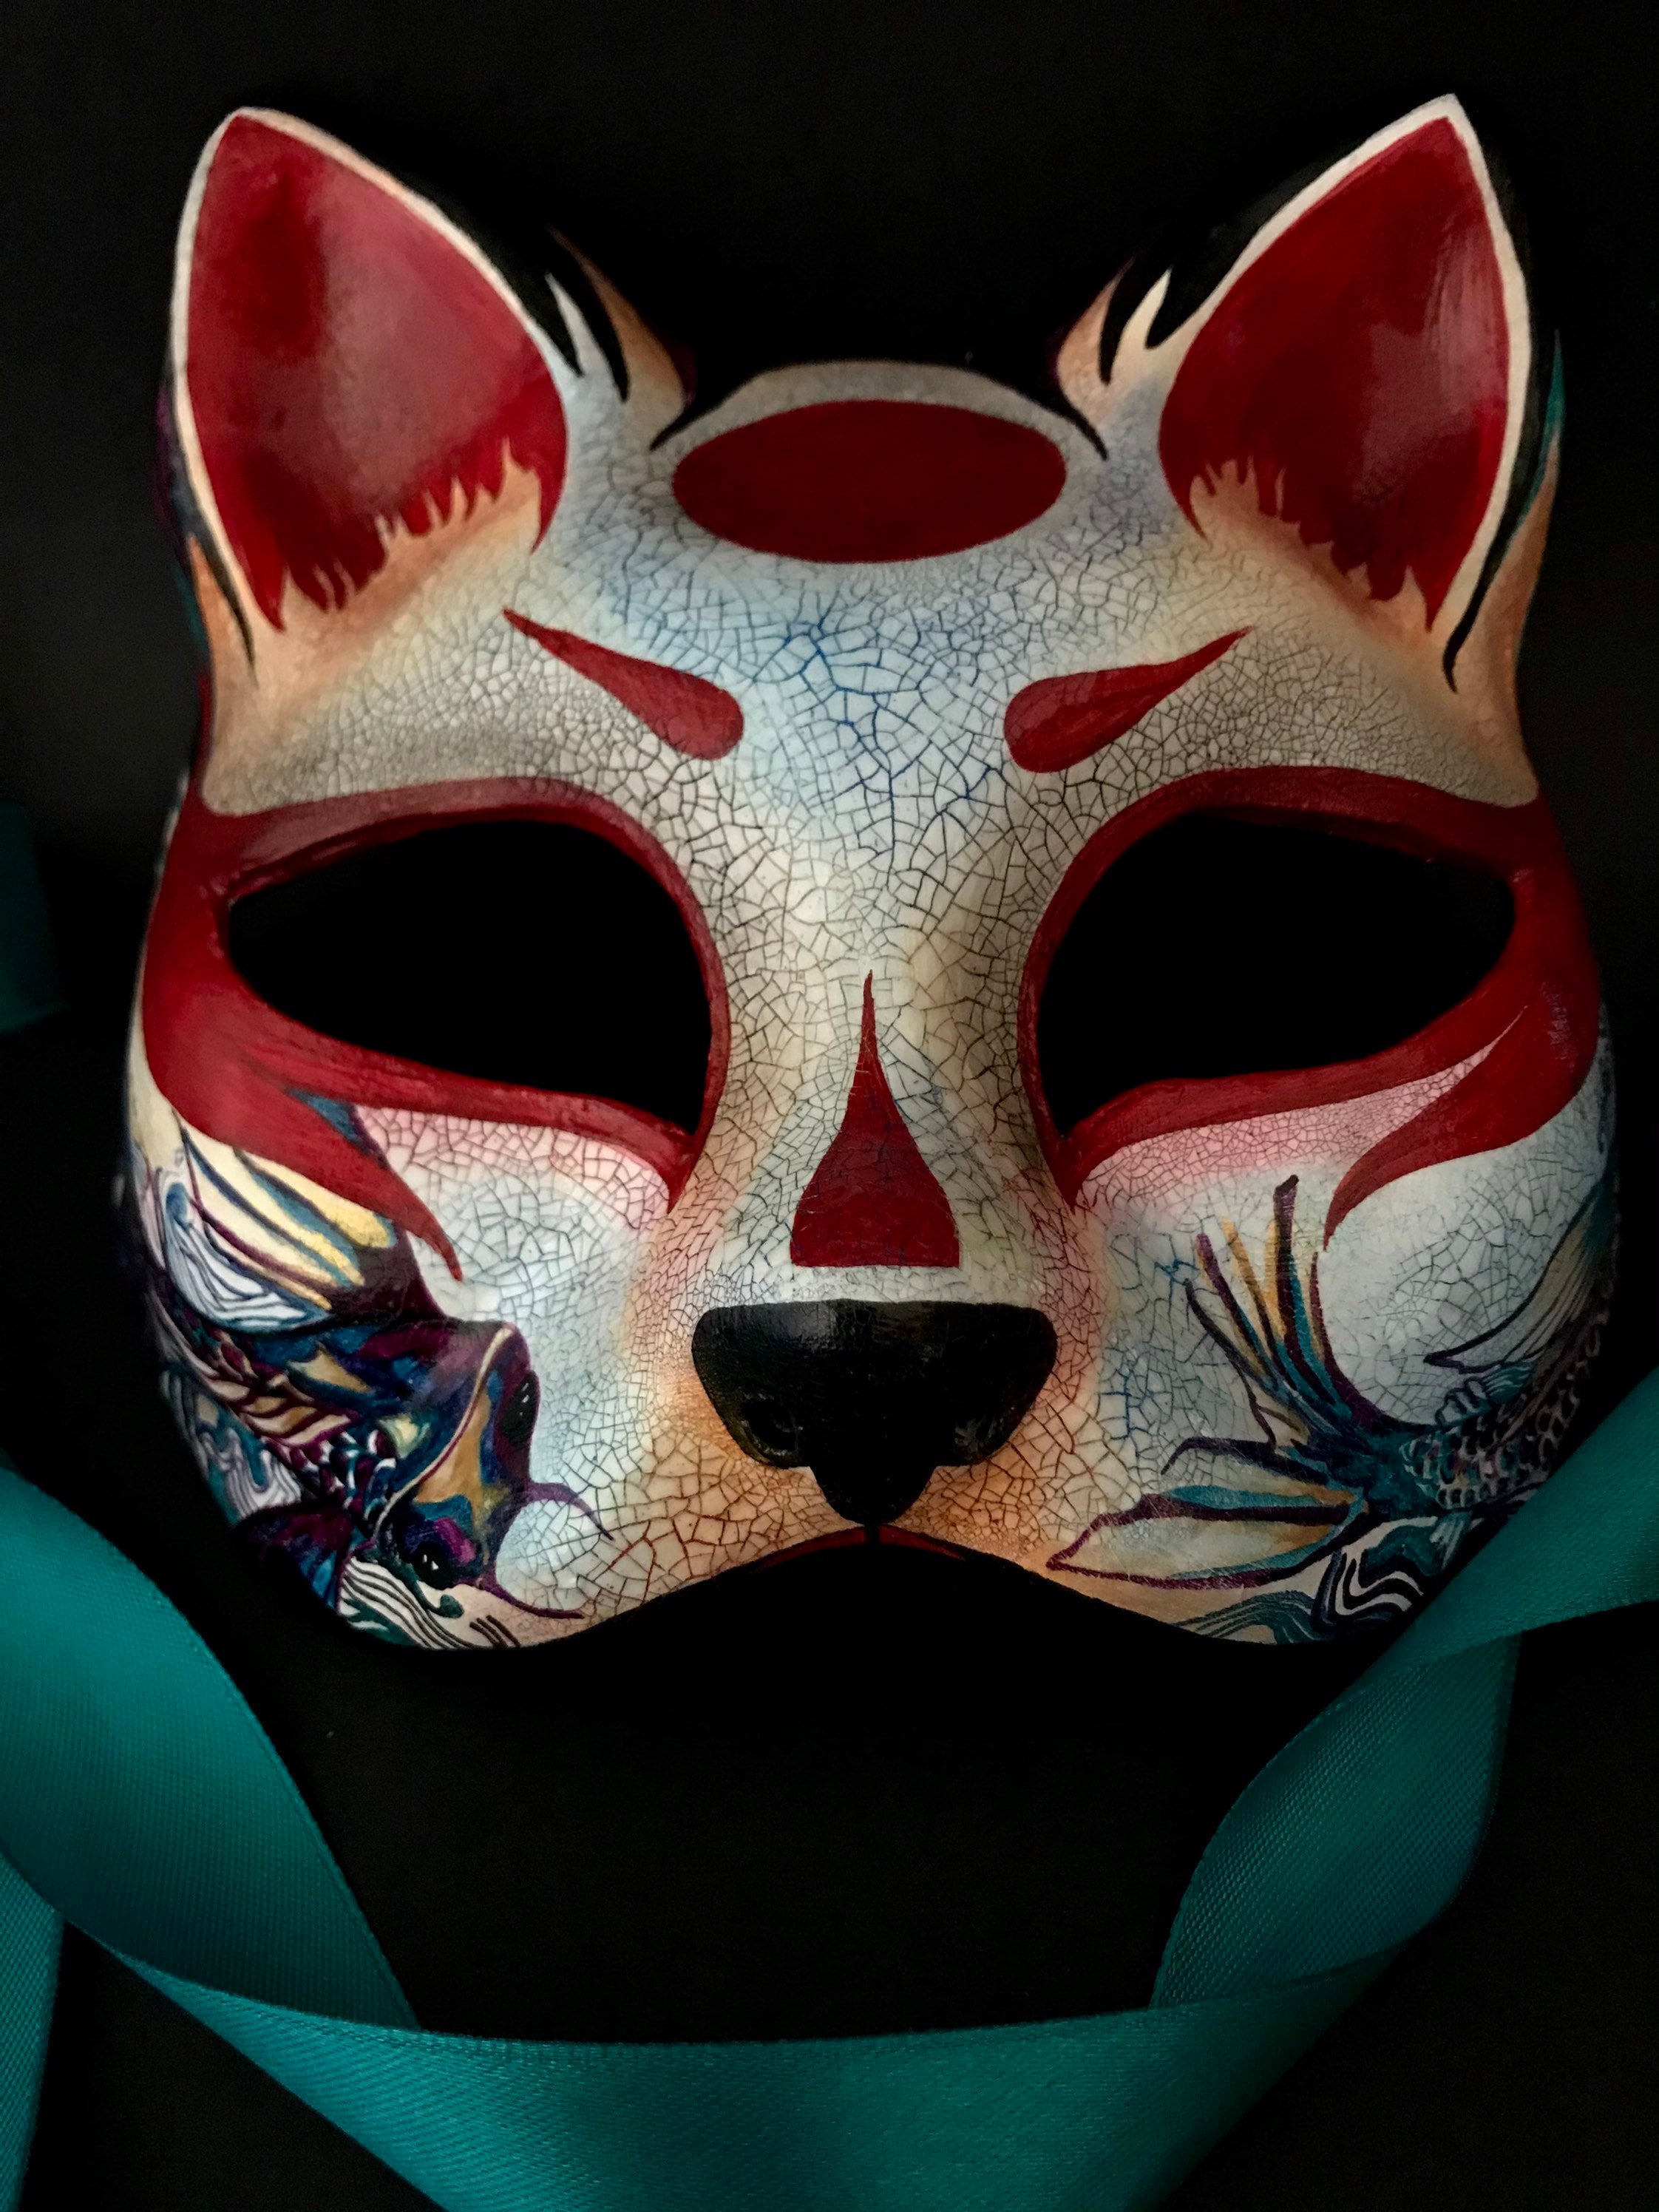 Made to order.Kitsune mask. Japanese fox mask. Carnival mask . | Etsy